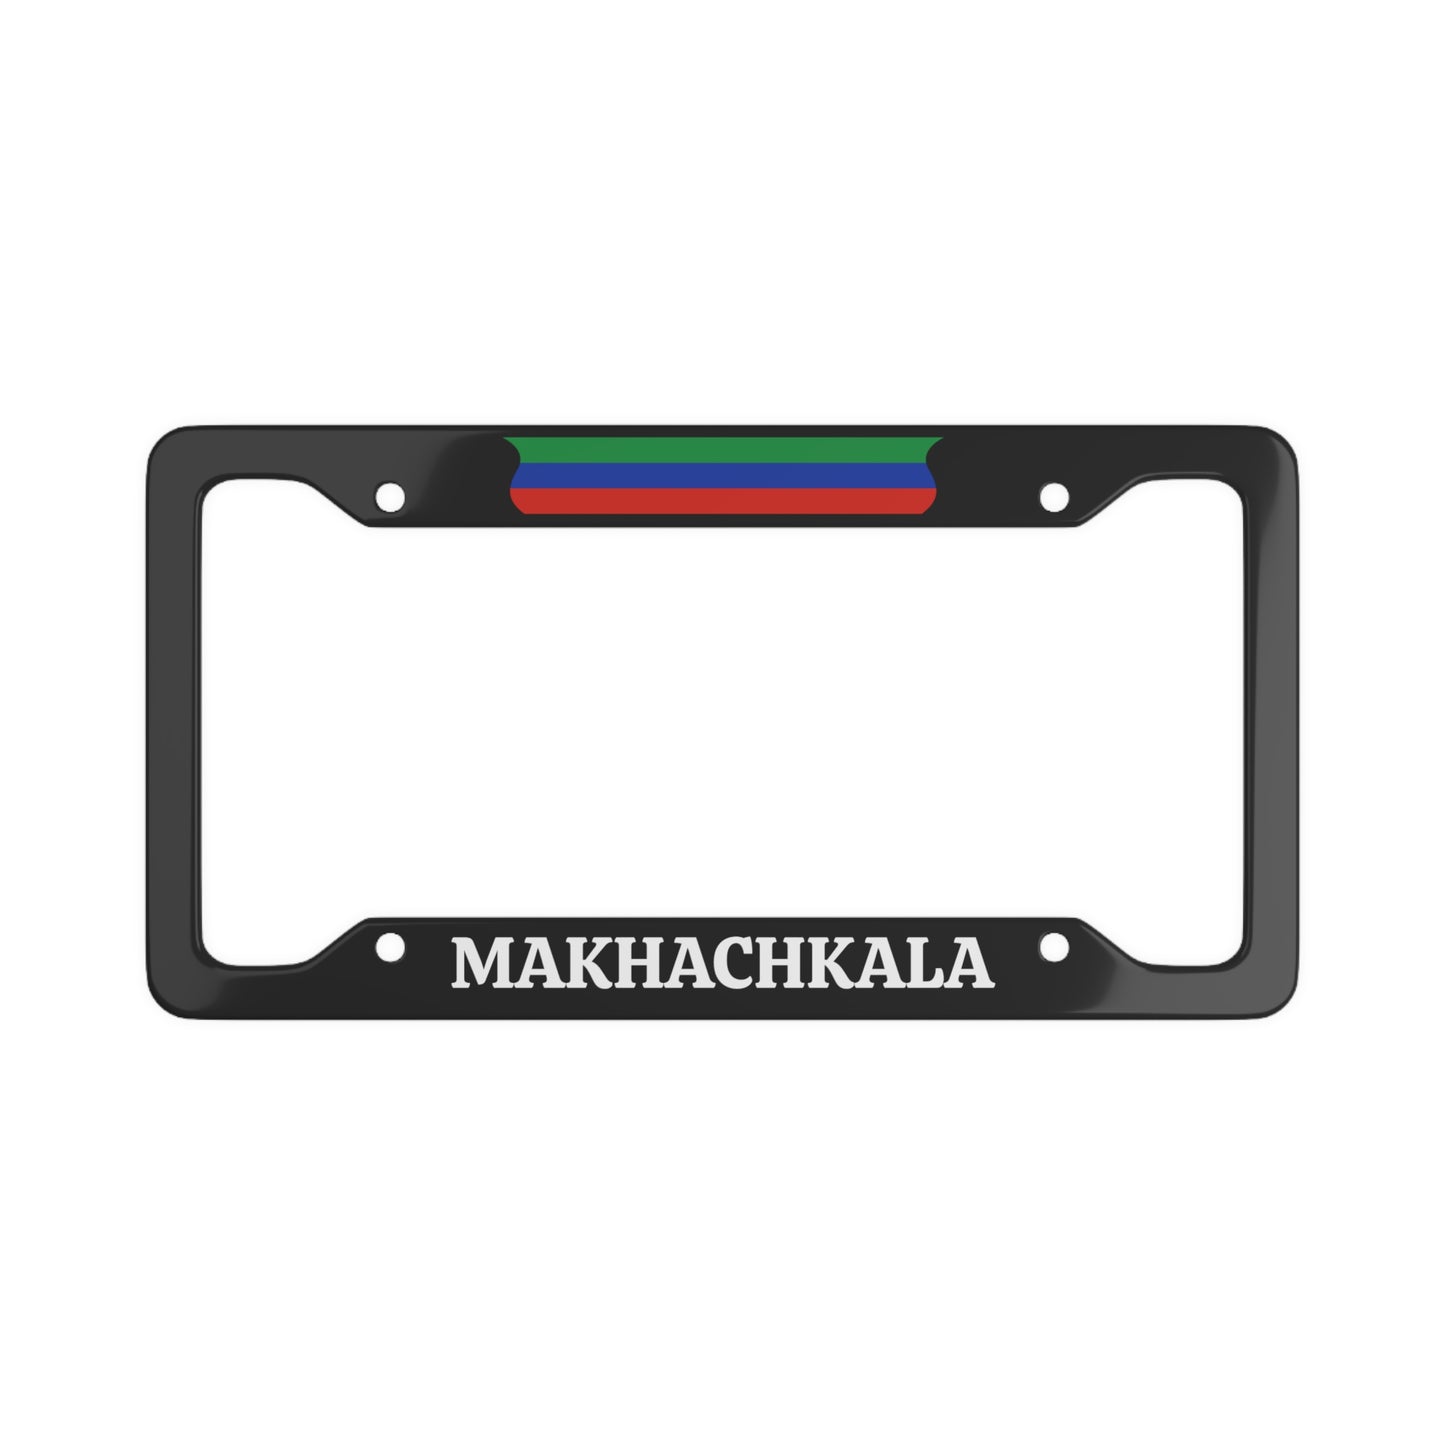 Makhachkala License Plate Frame